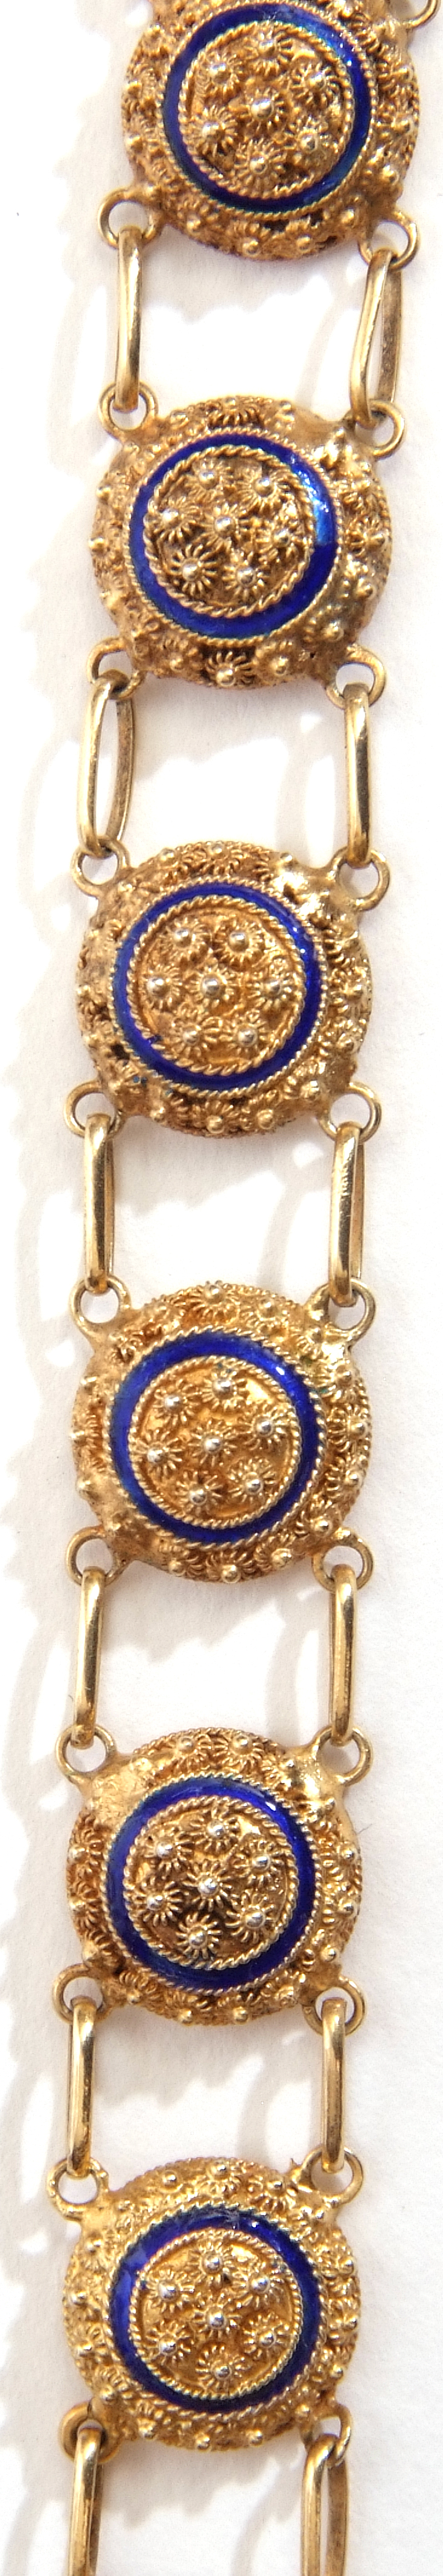 Vintage Portuguese silver gilt and enamel bracelet, a design featuring nine joined circular filigree - Image 2 of 4